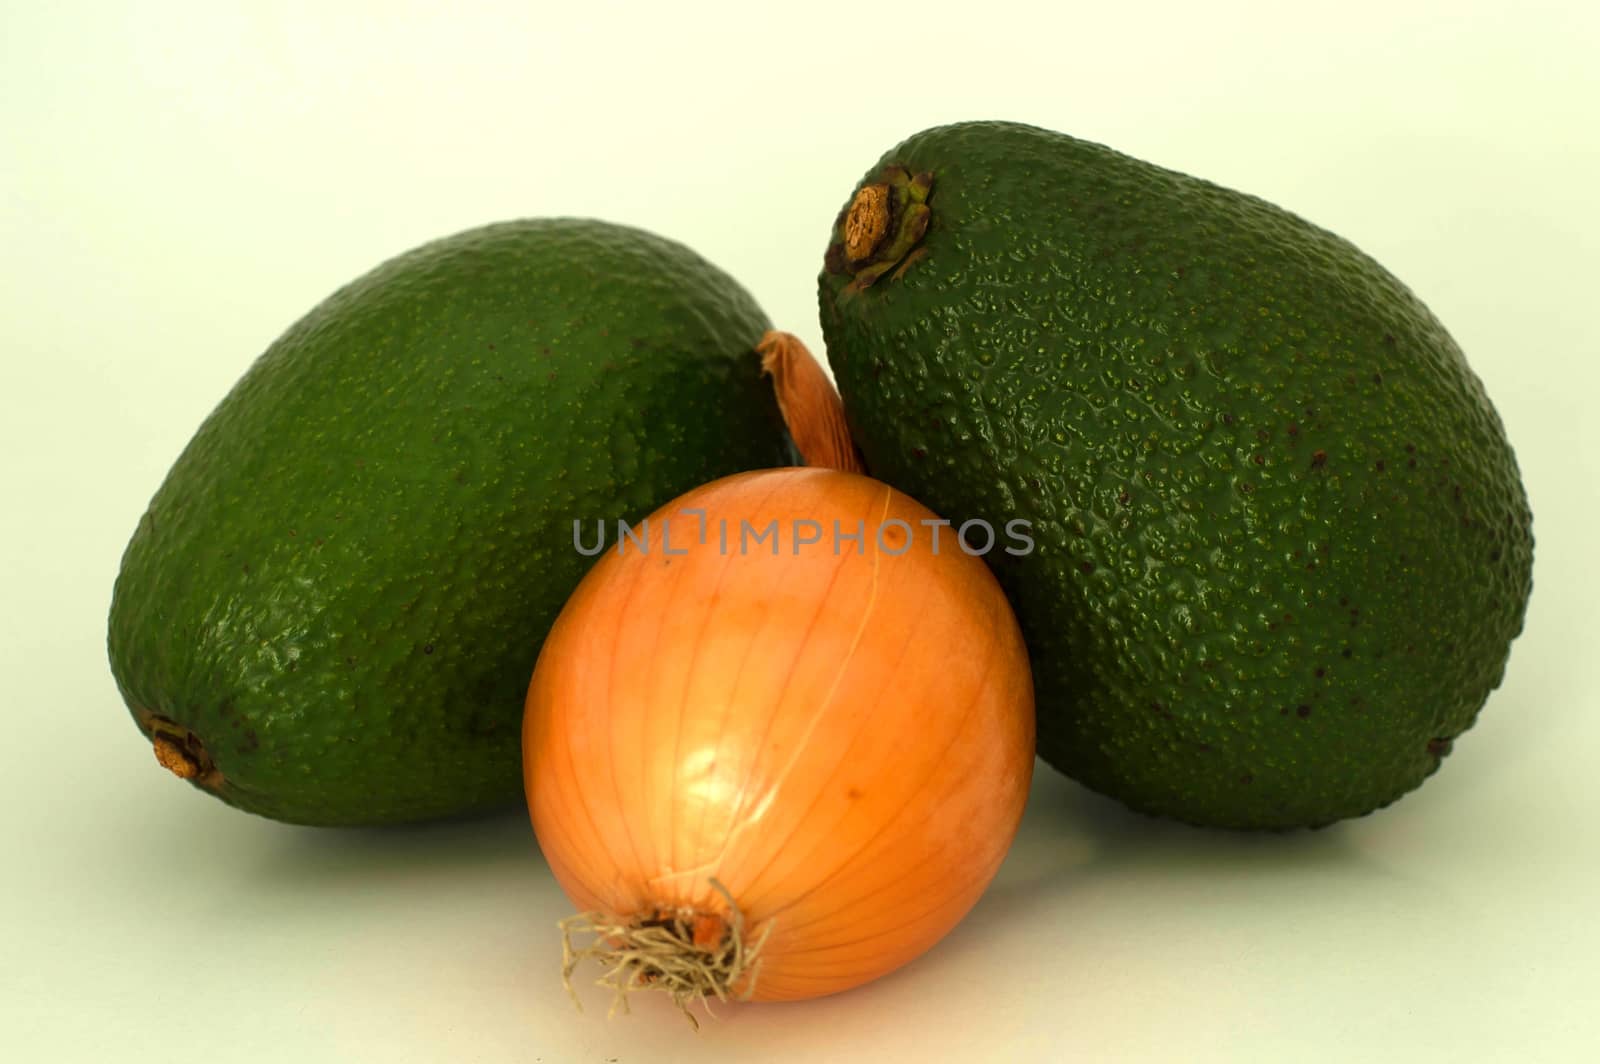 Avocado with onion